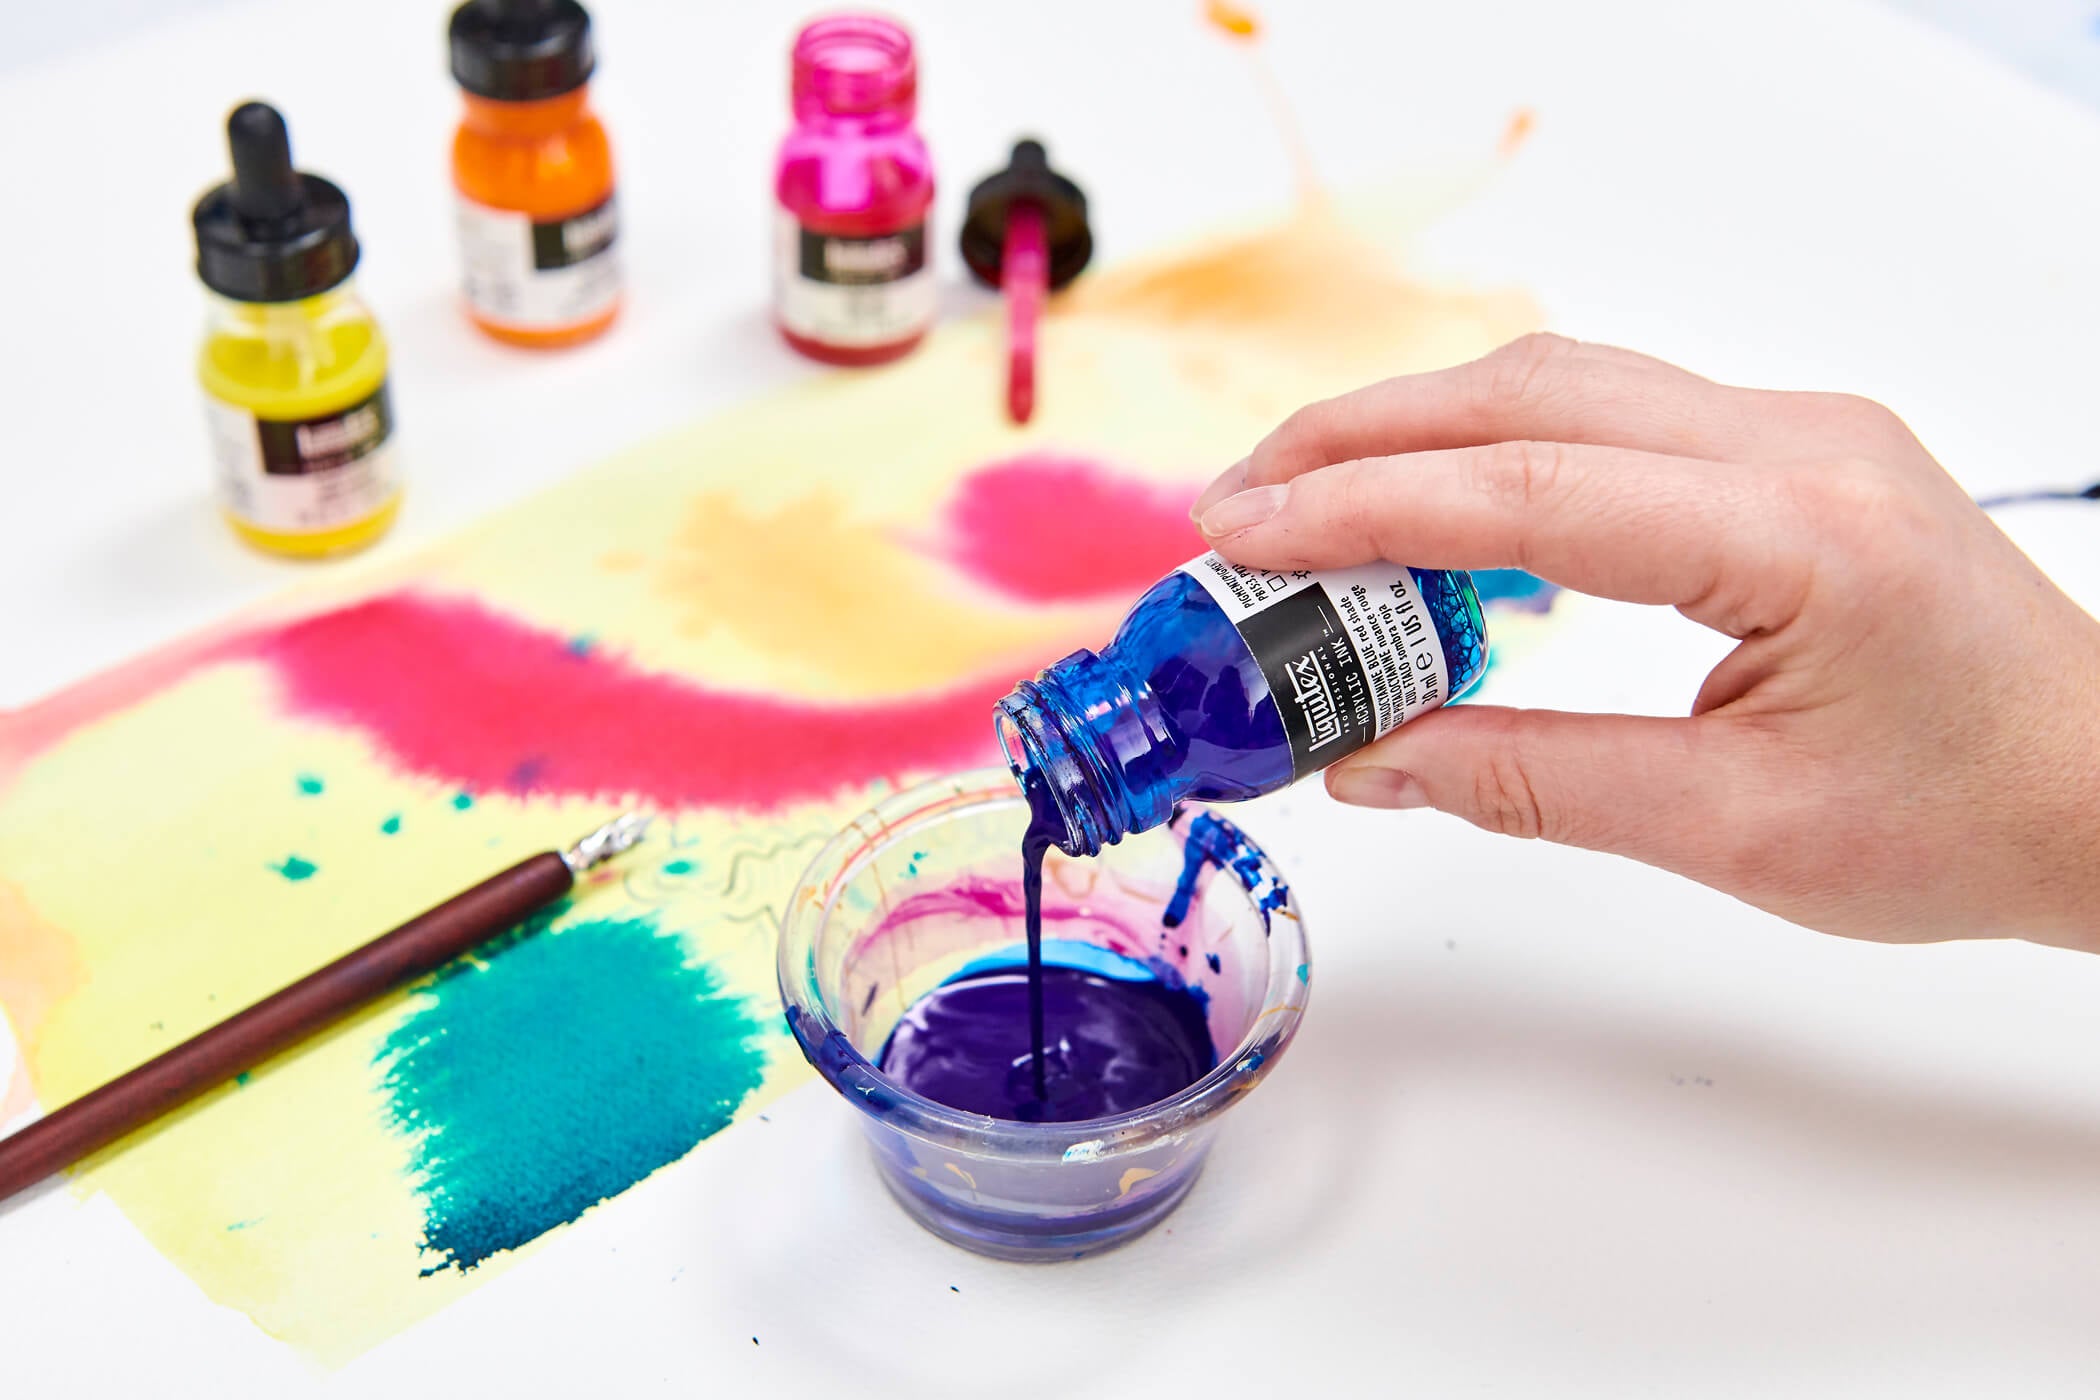 Acrylic Ink Set, 3 Transparent Earth Colors, 30ml (Liquitex Acrylic Ink)